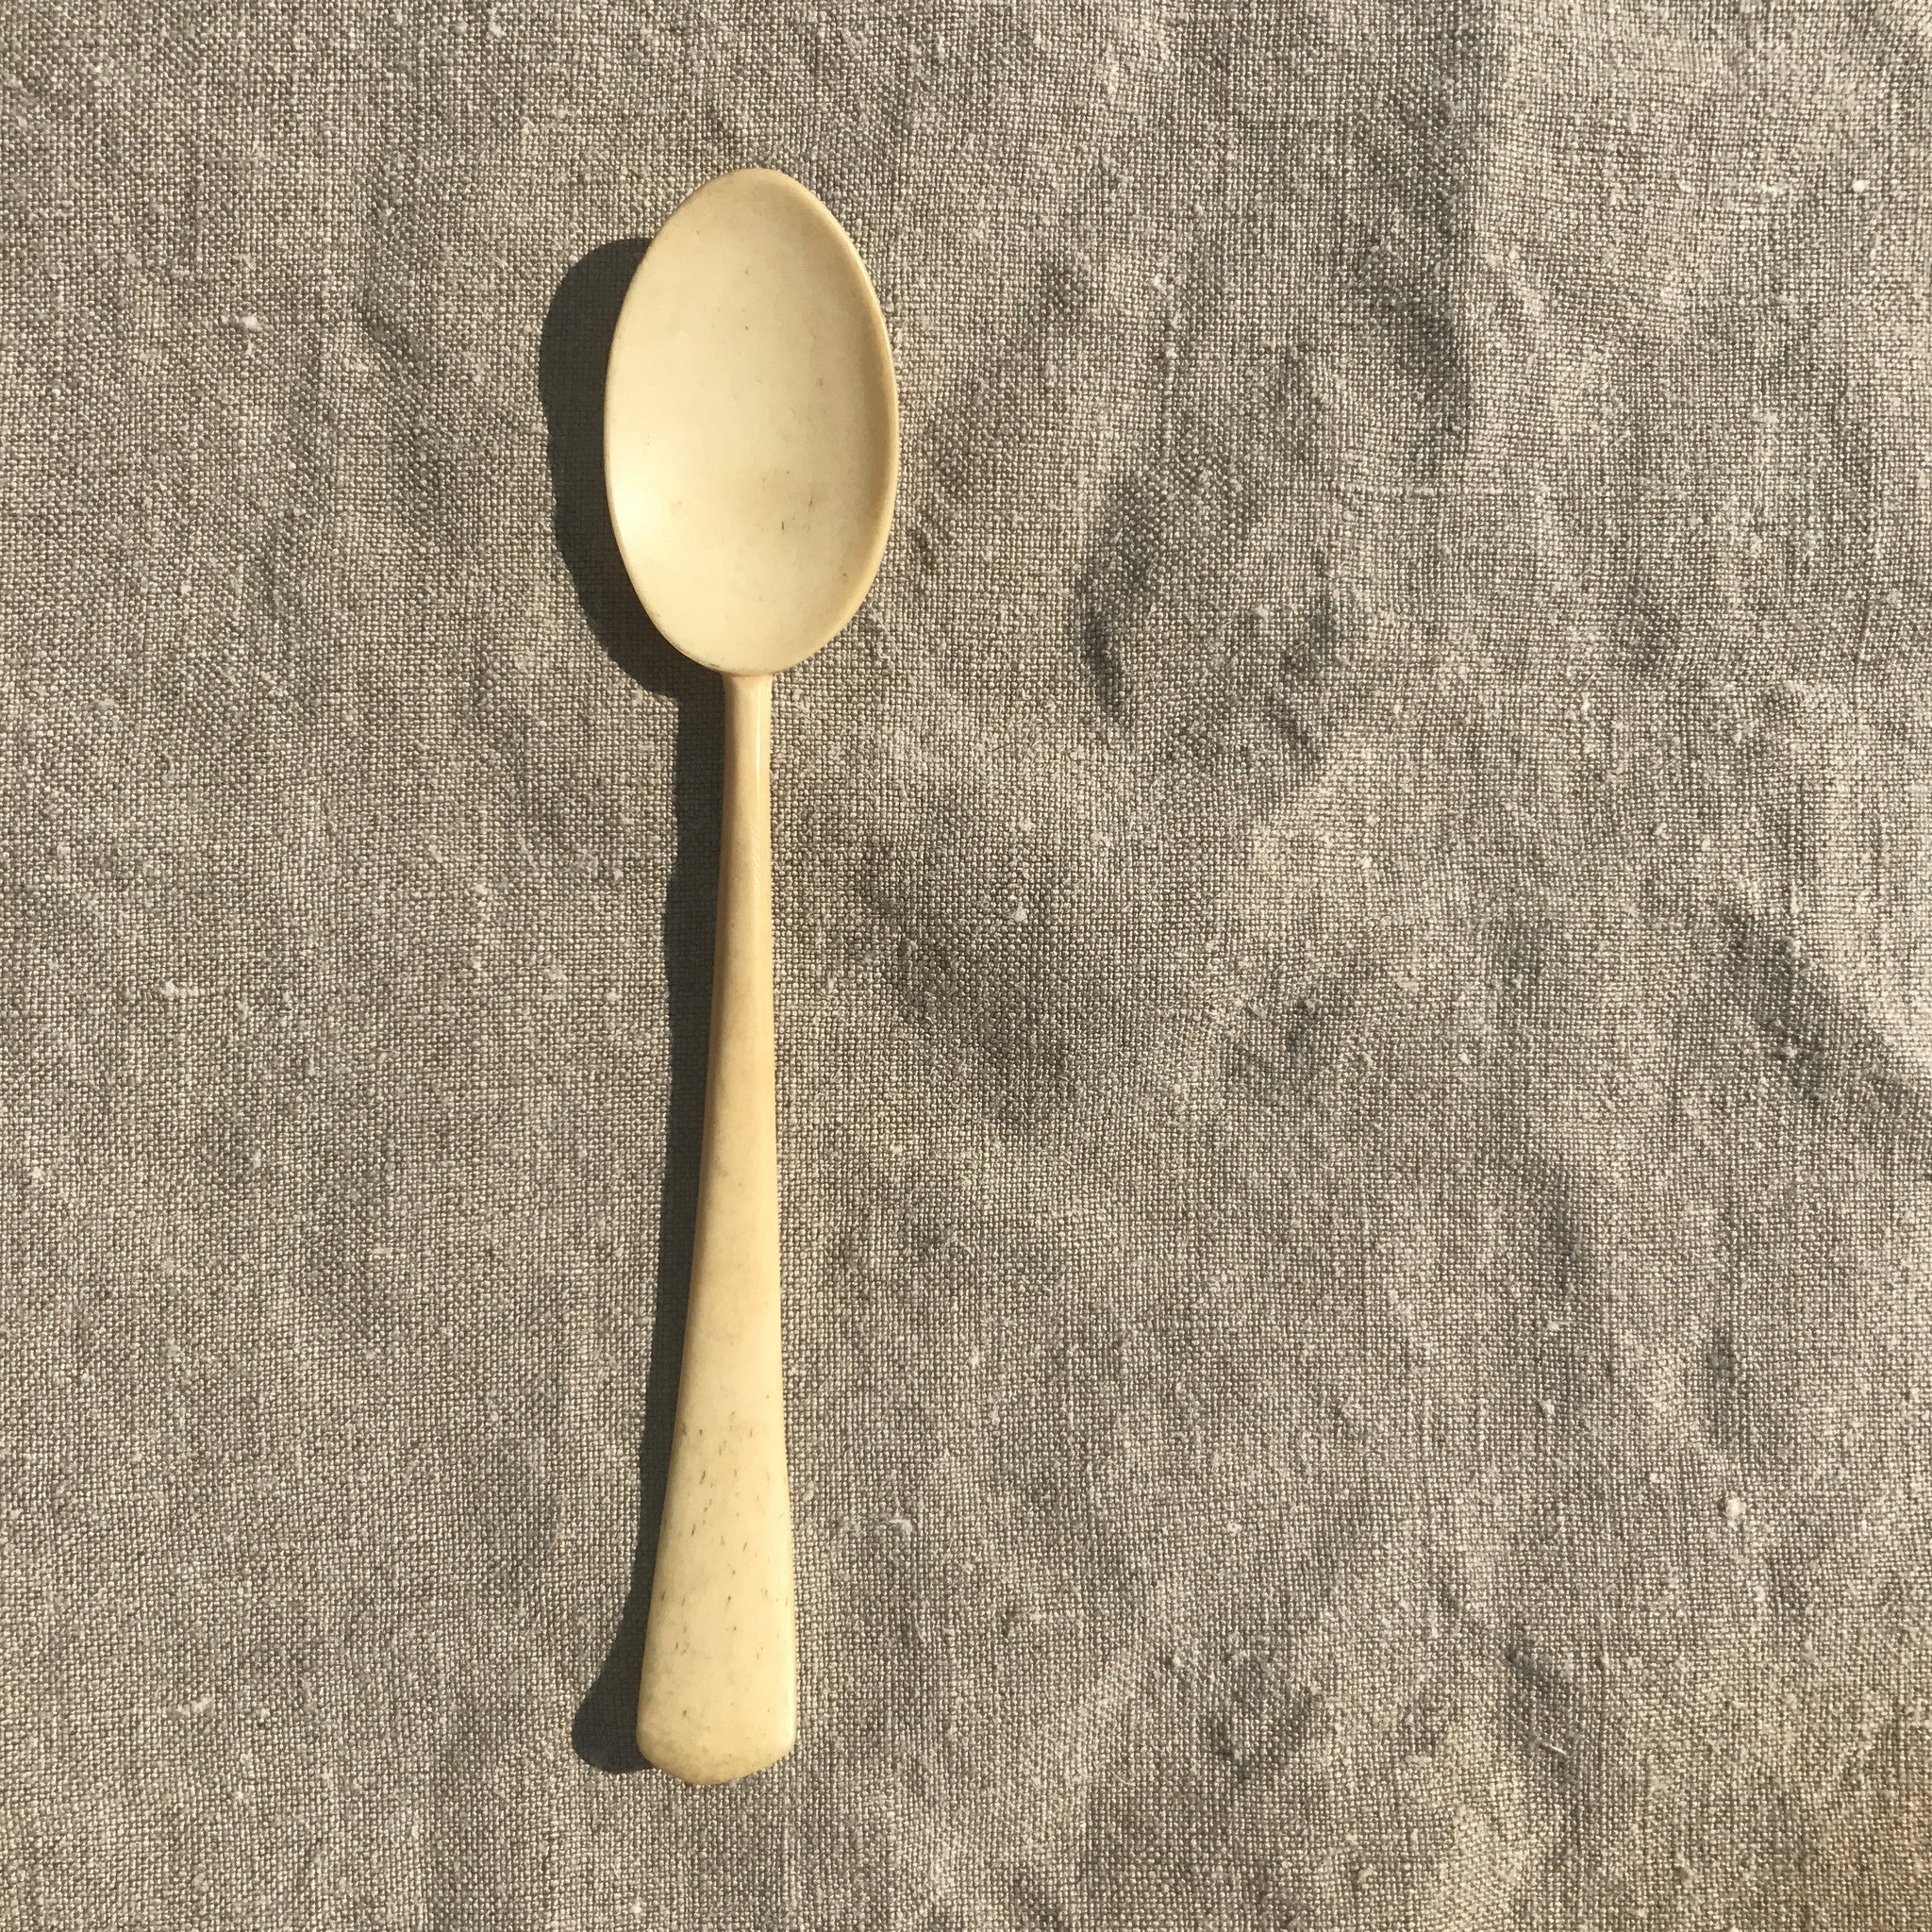 seaman's caviar spoon